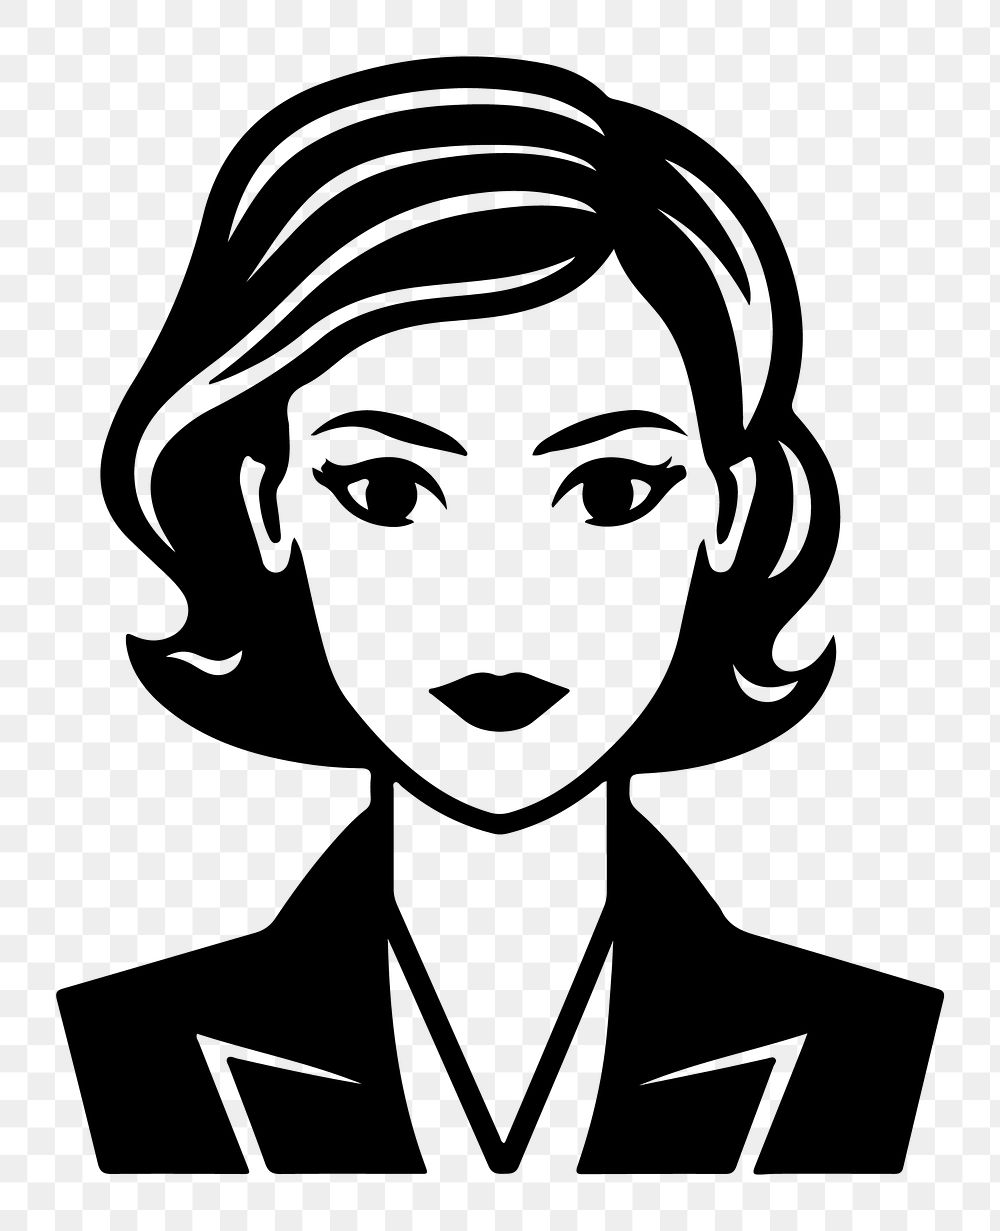 Businesswoman png character line art, transparent background